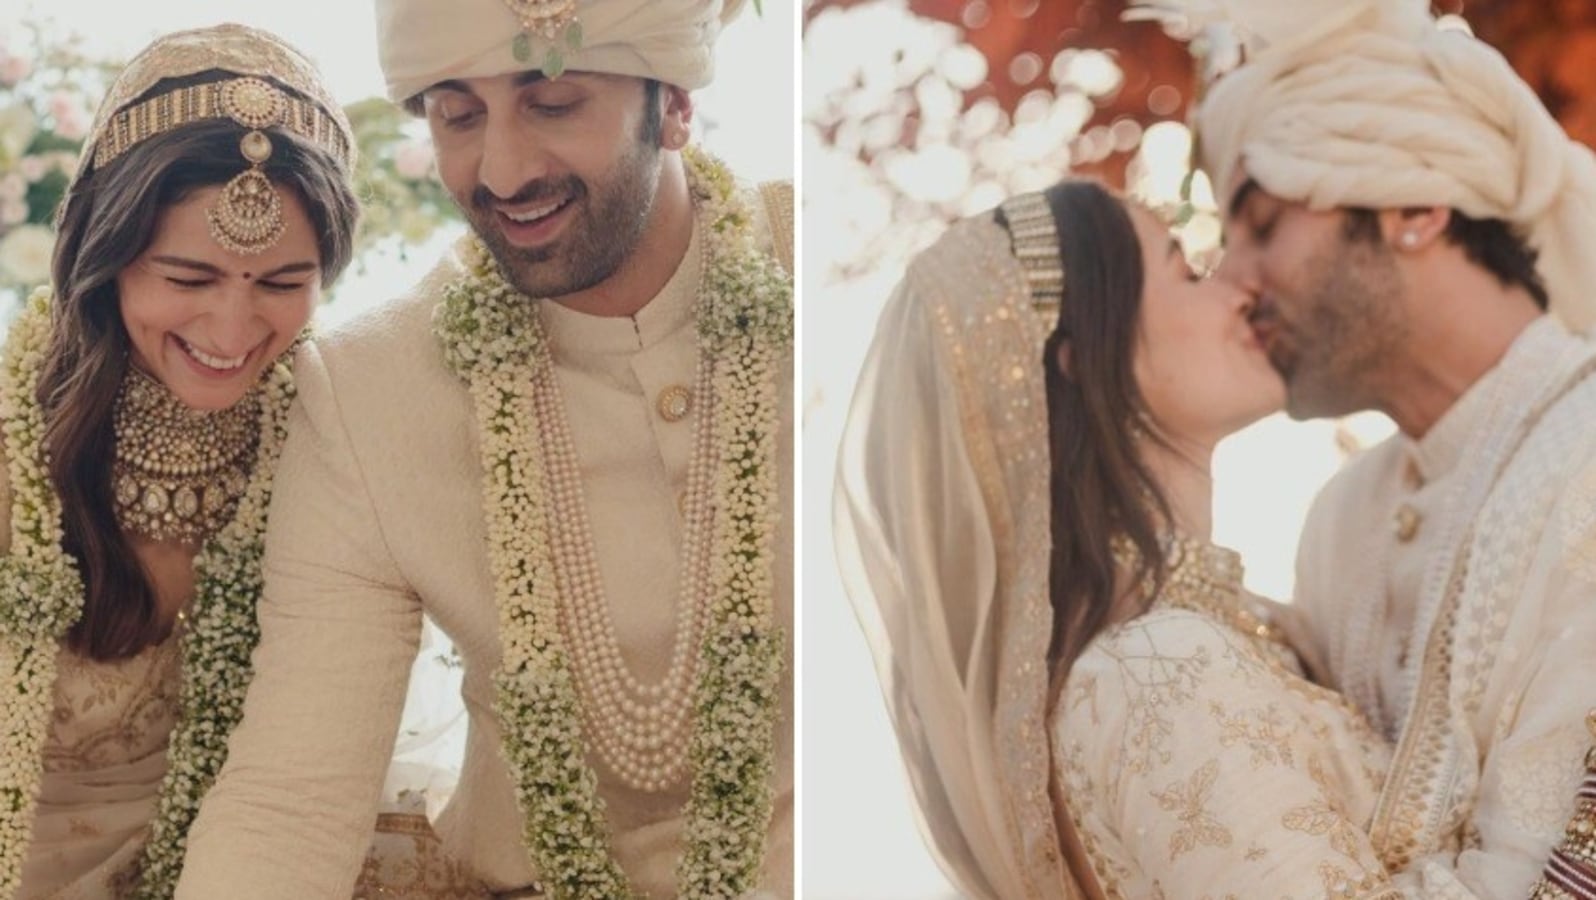 Ranbir Kapoor on his upcoming wedding to Alia Bhatt: “I want to